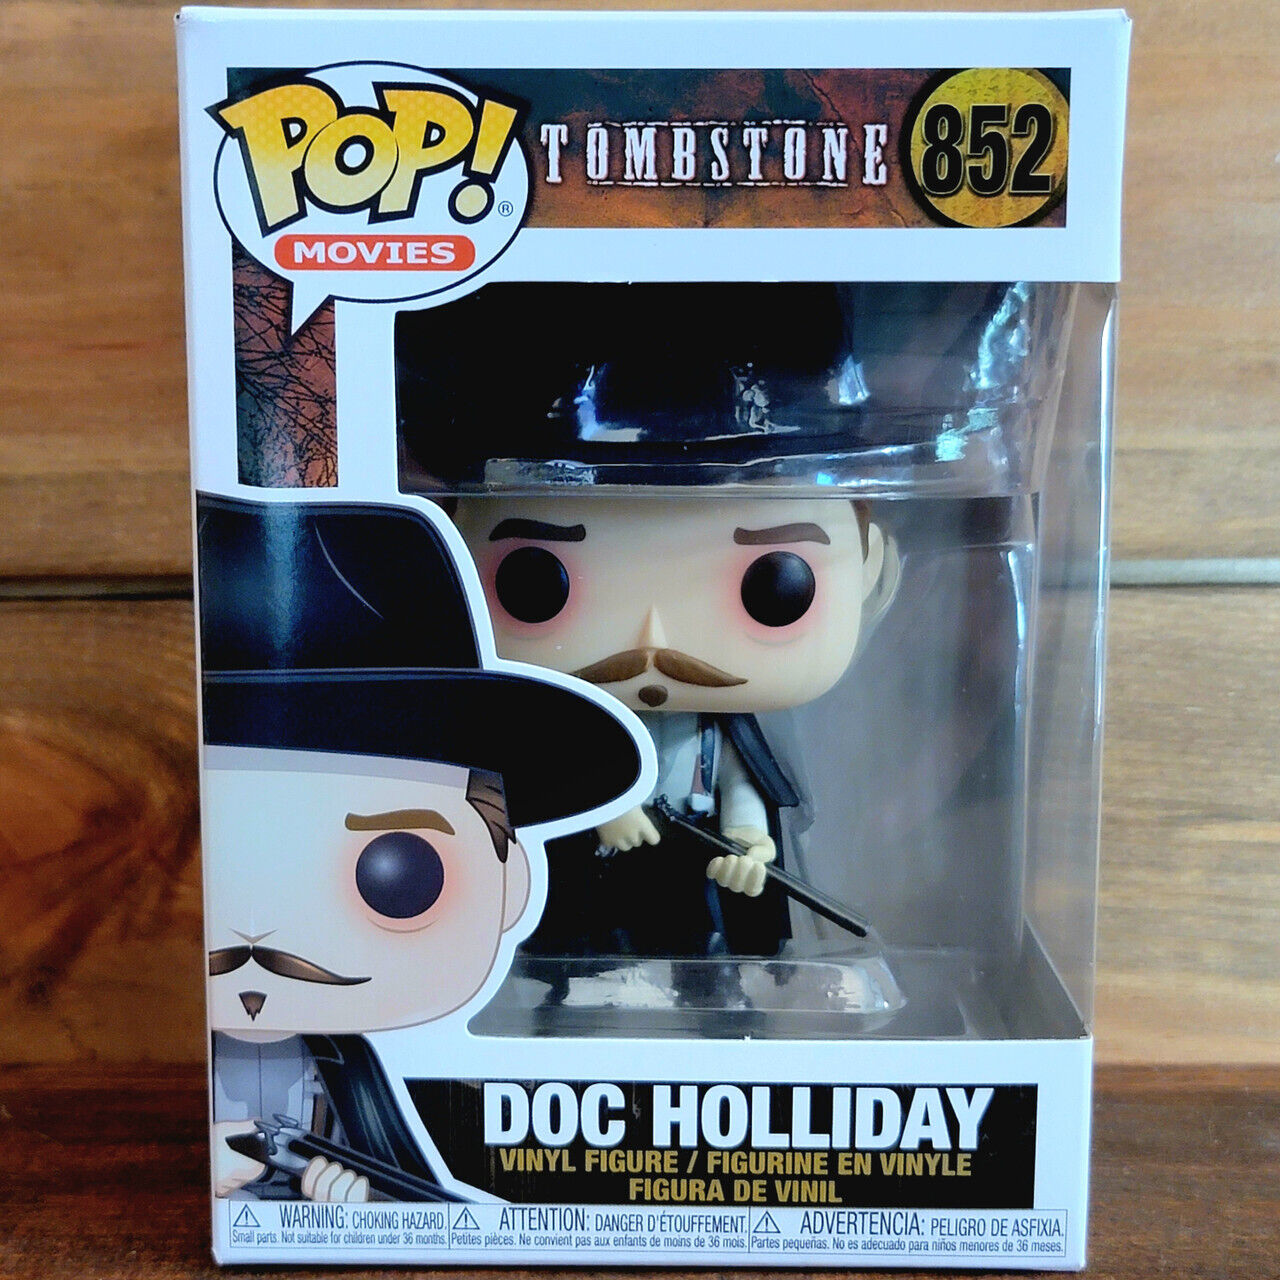 Doc Holliday 852 Tombstone Movies Funko Pop Vinyl Figure